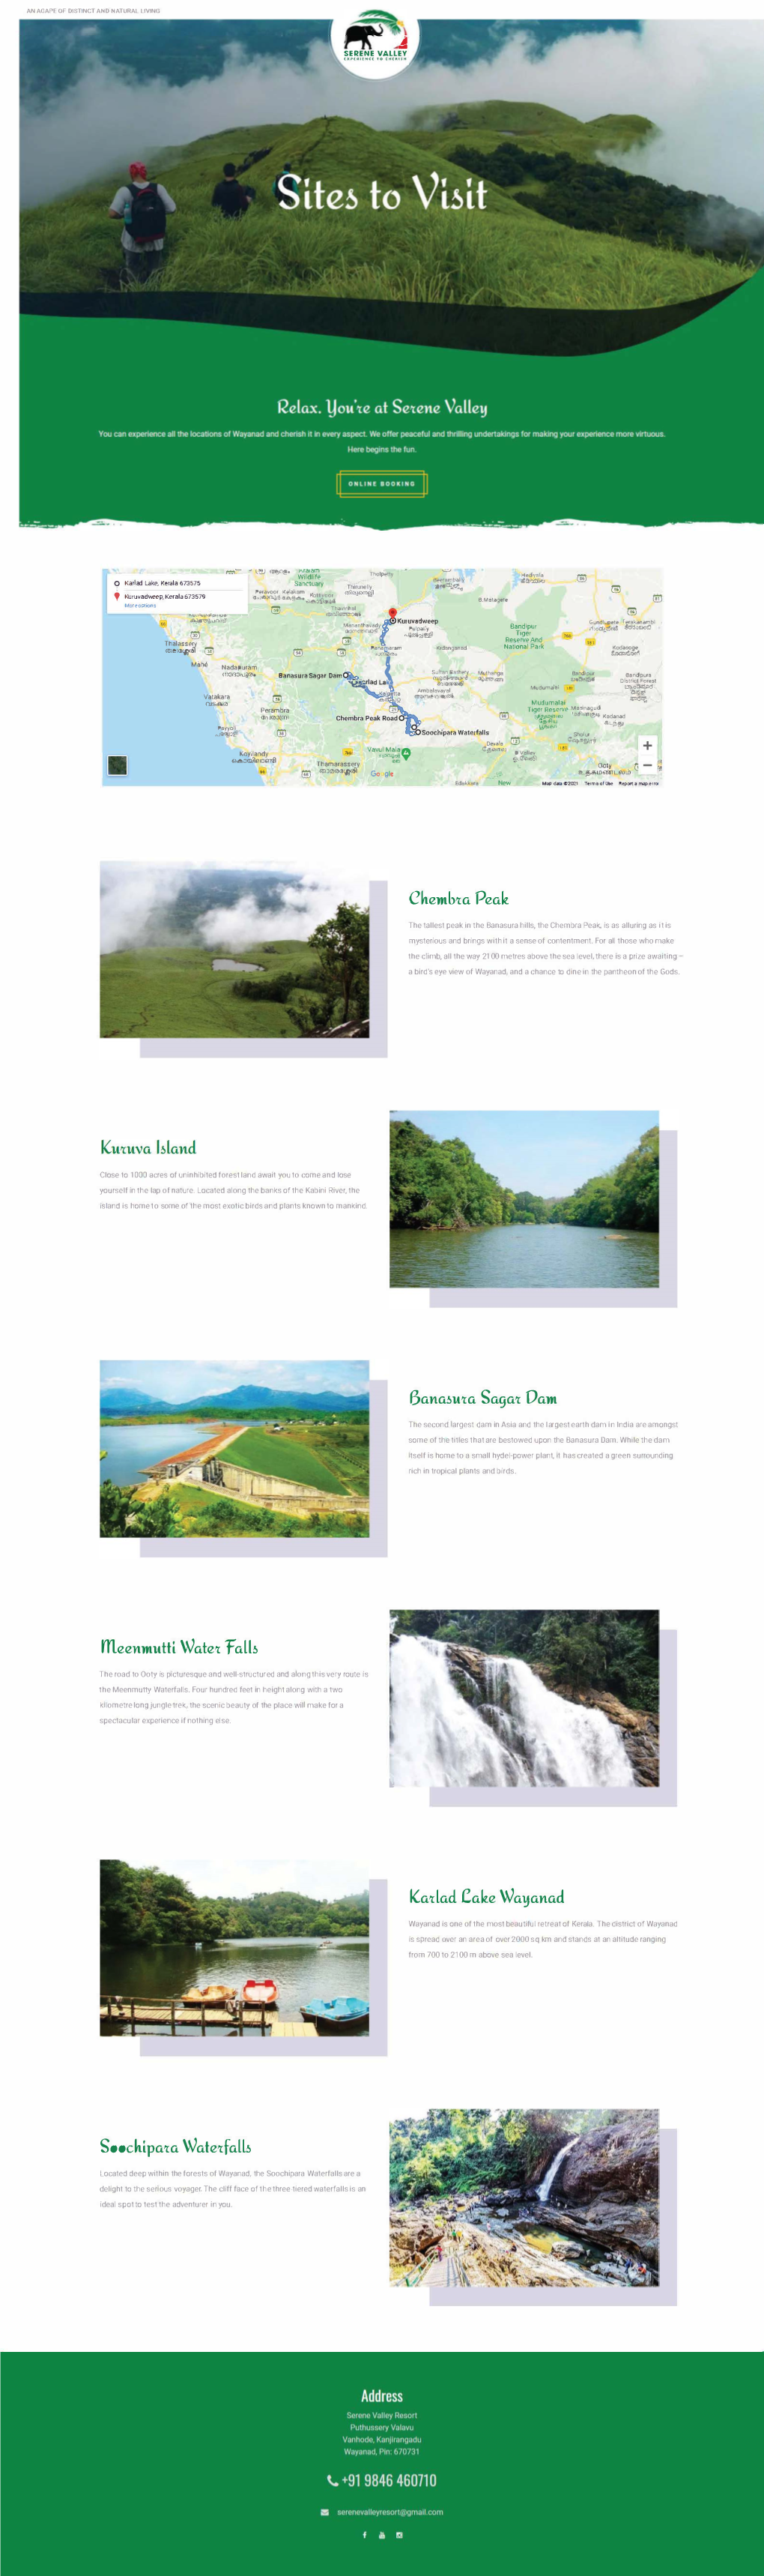 Sites to Visit in Serene Valley Resort